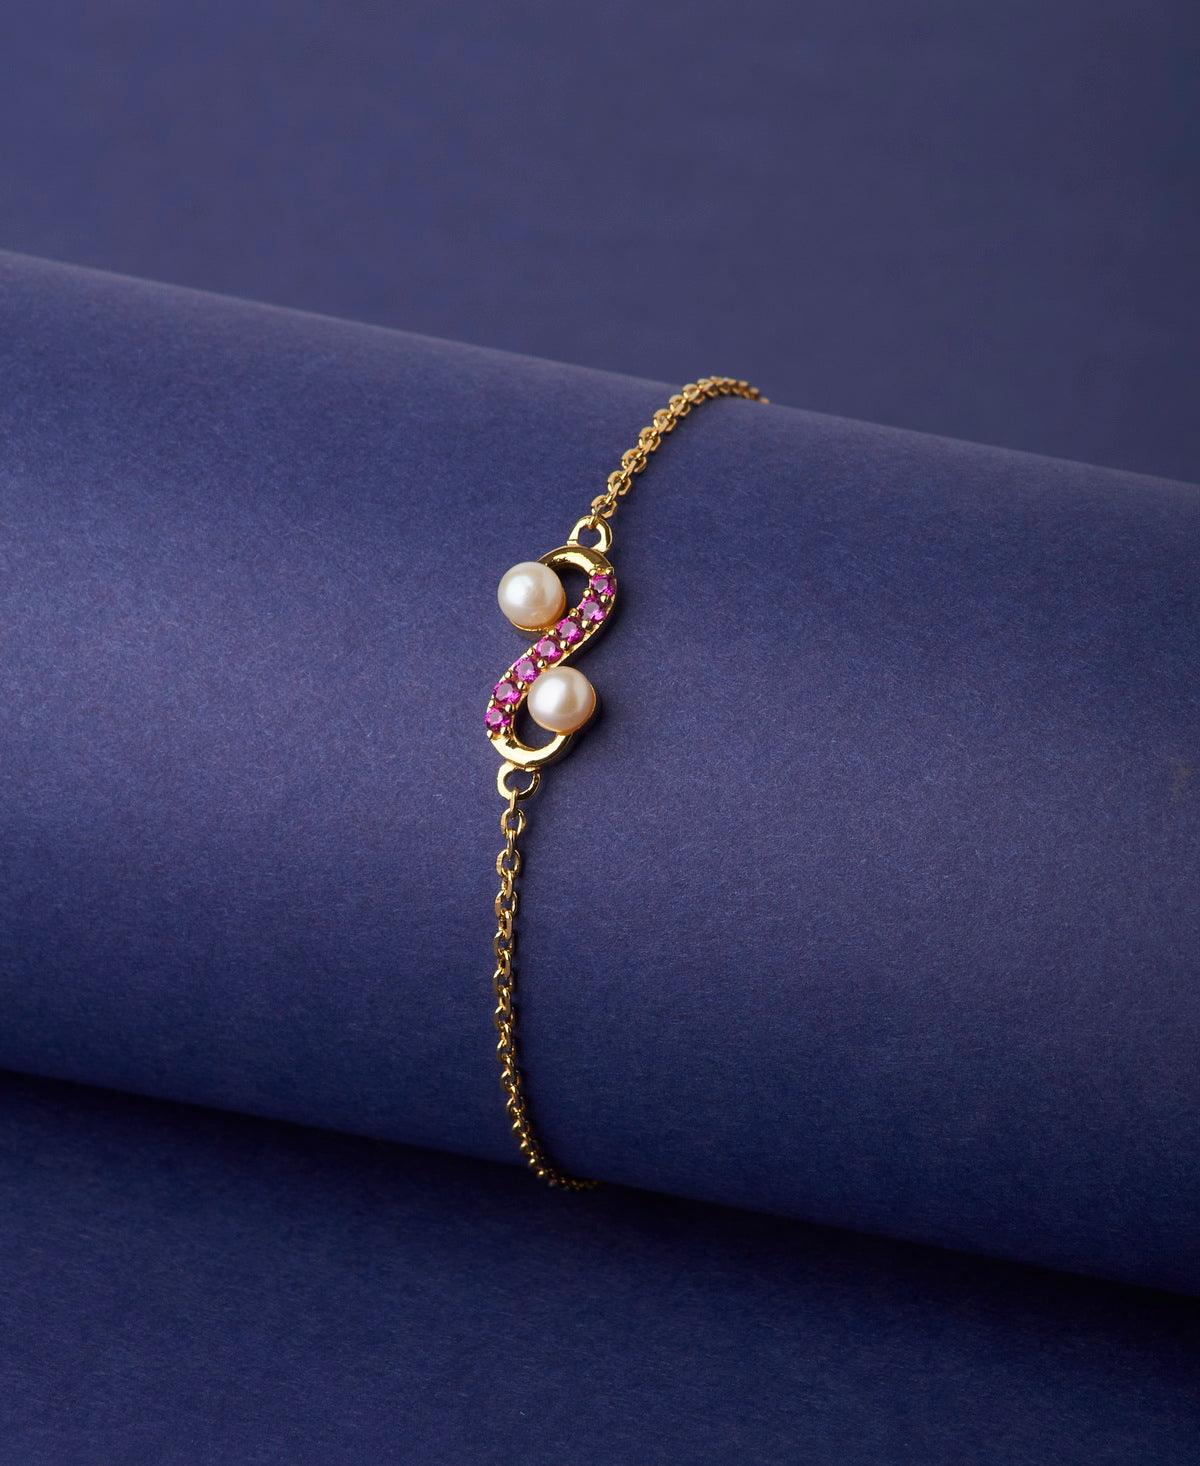 Trendy Stone Studded Silver Bracelet - Chandrani Pearls